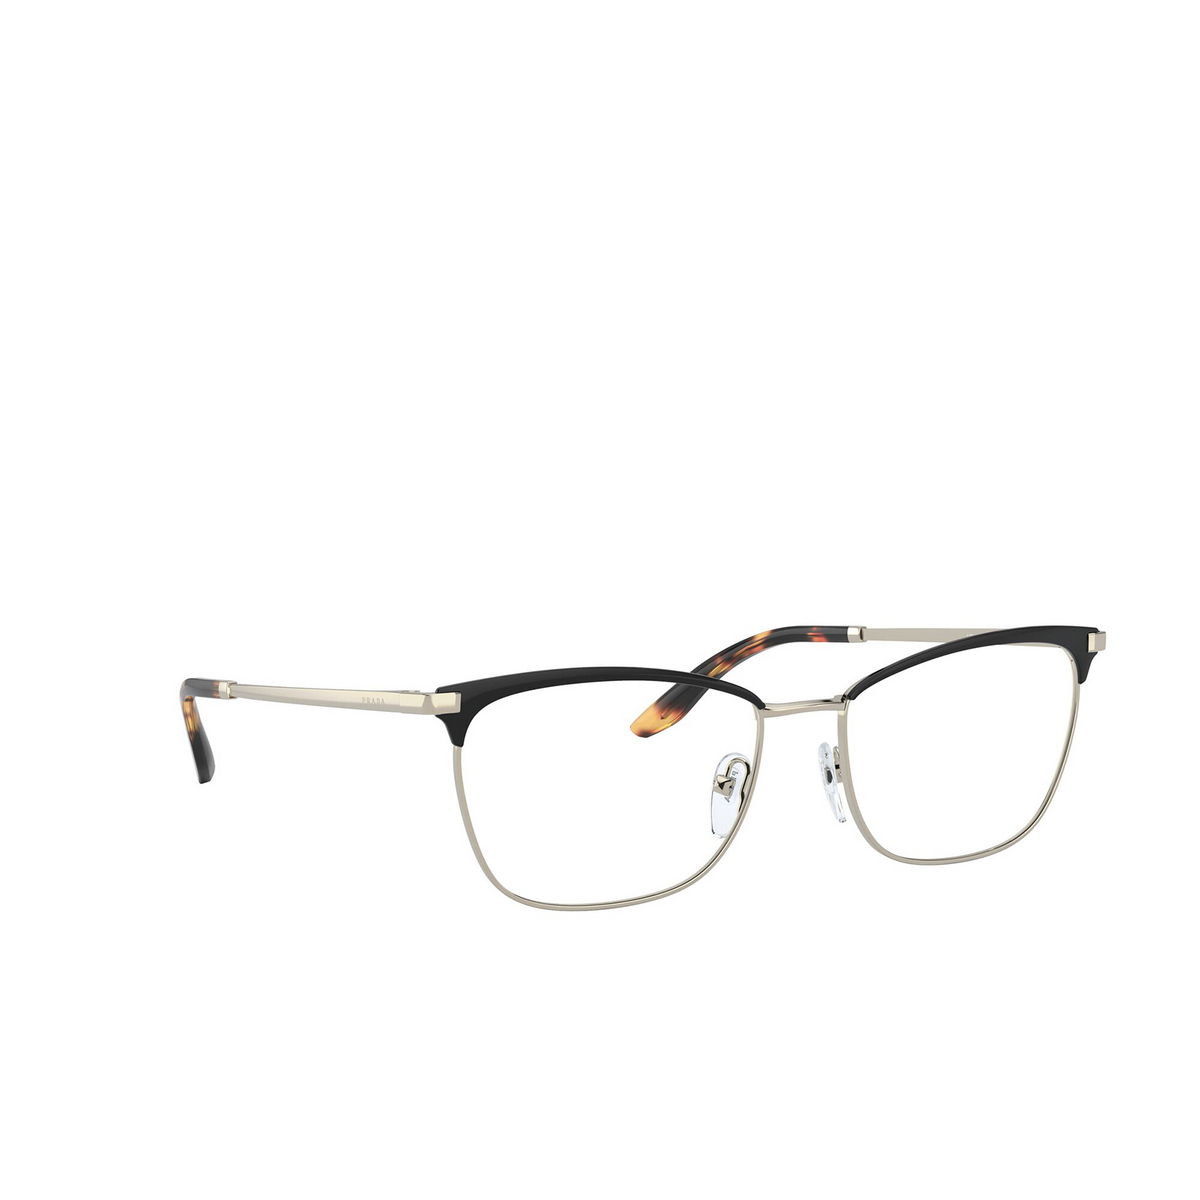 Prada® Irregular Eyeglasses: PR 57WV color Black / Pale Gold AAV1O1 - 2/3.